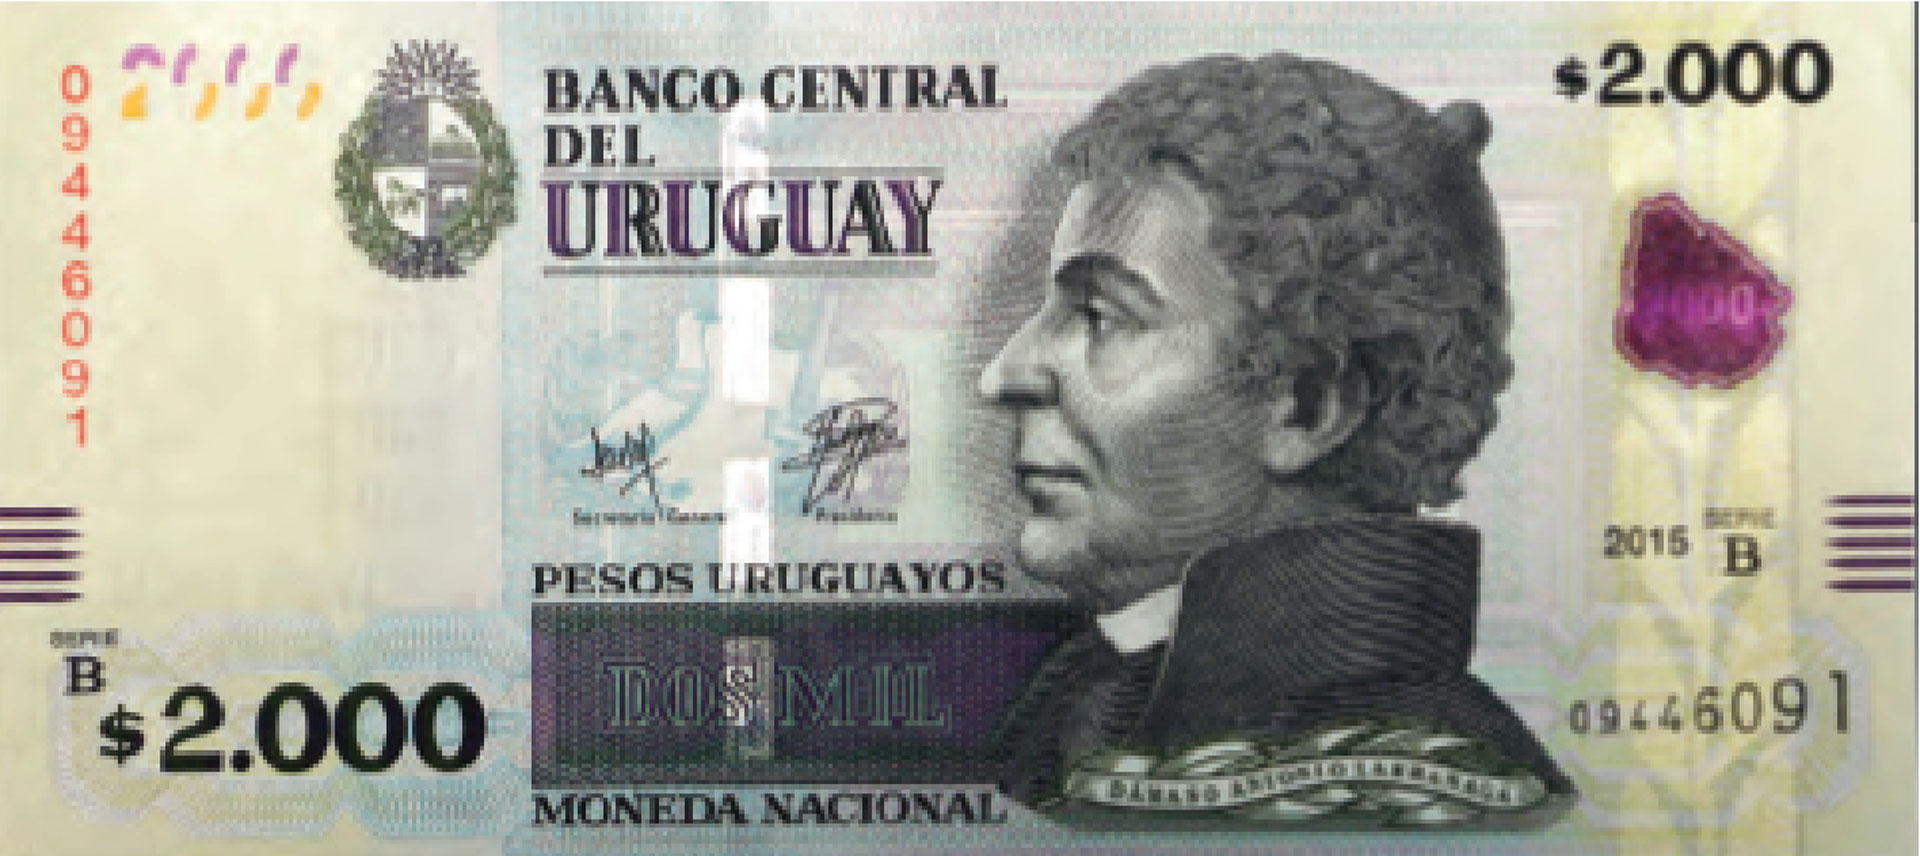 URUGUAY
Peso Uruguayo : $2000 = USD 51.80
USD1 = $38.60